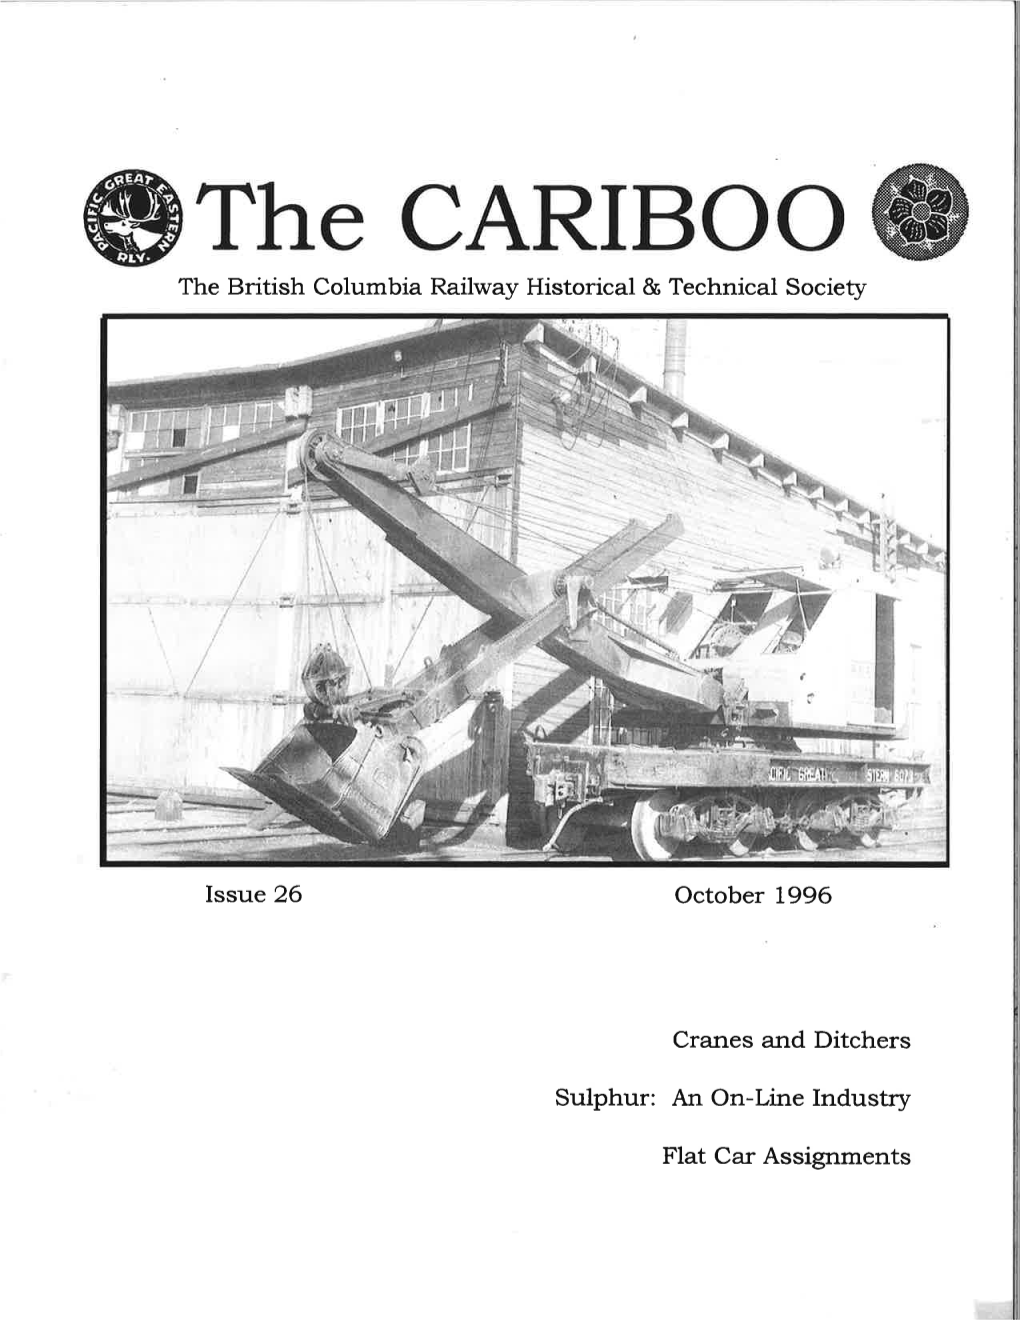 The CARIBOO the British Columbia Railway Historical & Technical Society